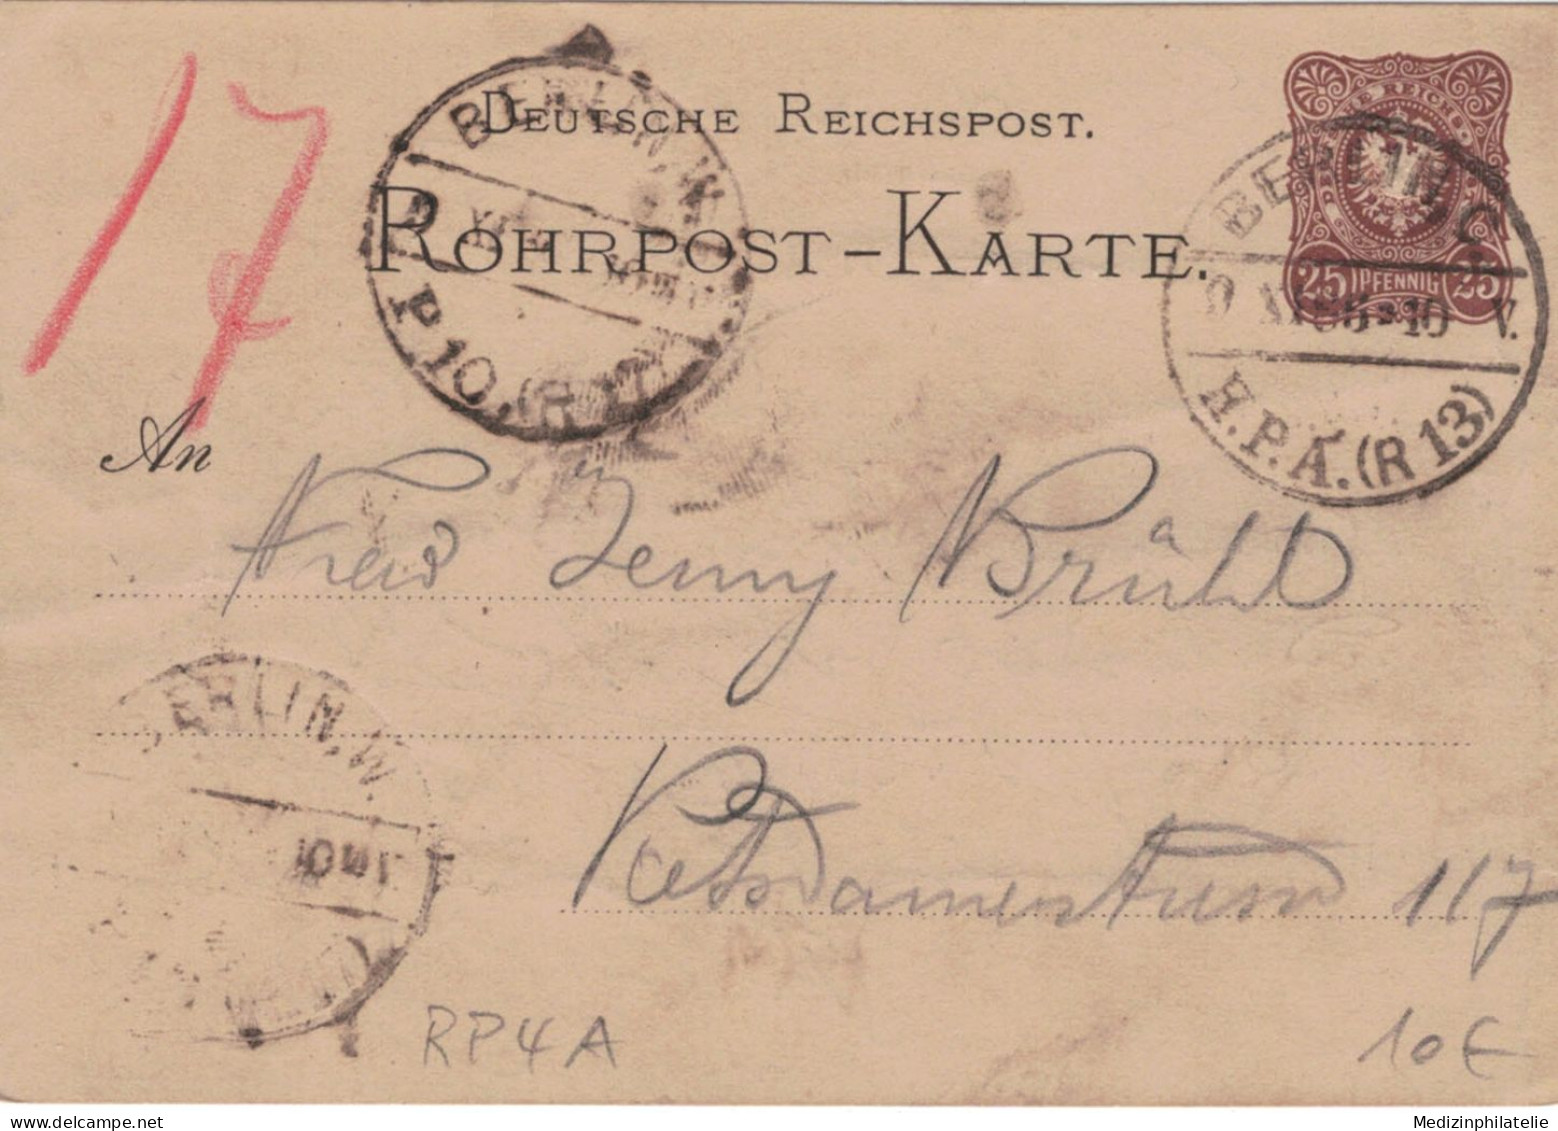 Rohrpost-Karte 25 Pf. Adler In Ellipse - 4 A - Berlin H.P.A. 1886 13 > 17 - Briefkaarten